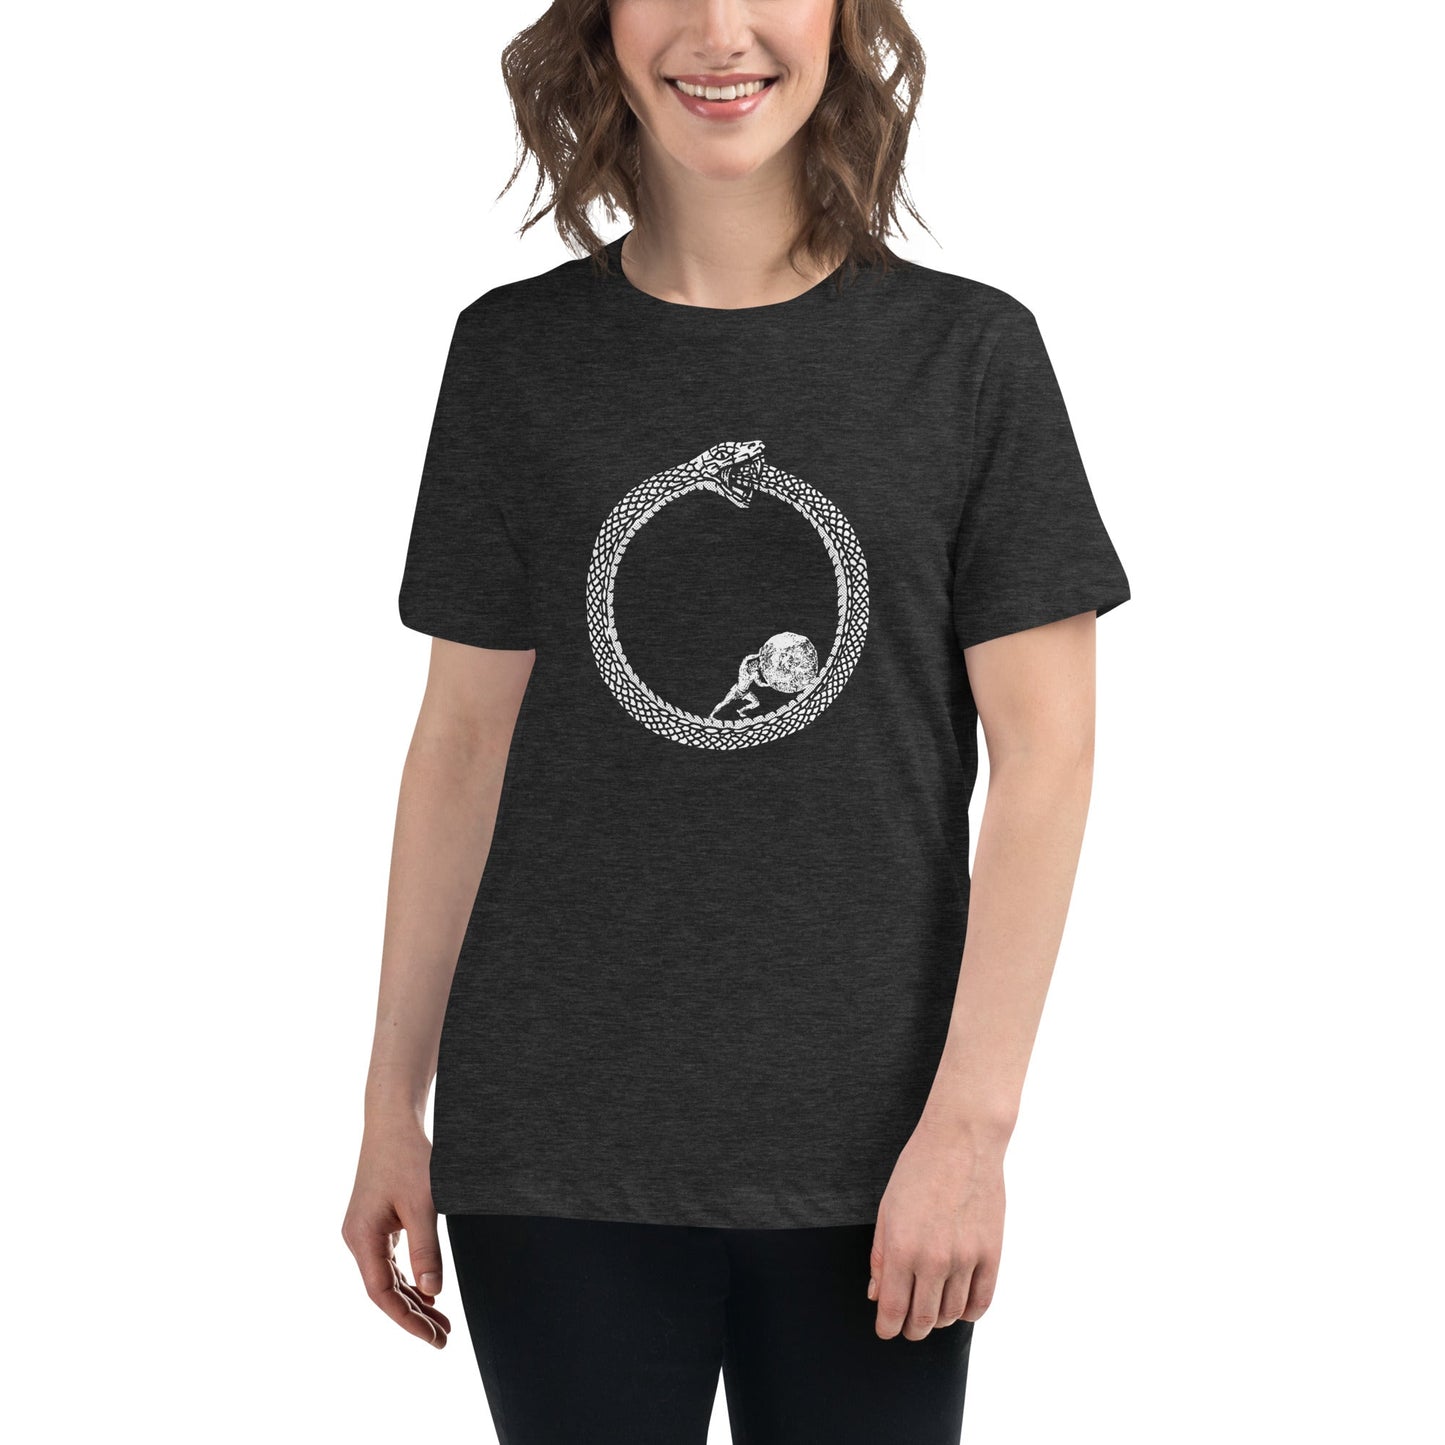 Sisyphus in Ouroboros - Women's T-Shirt